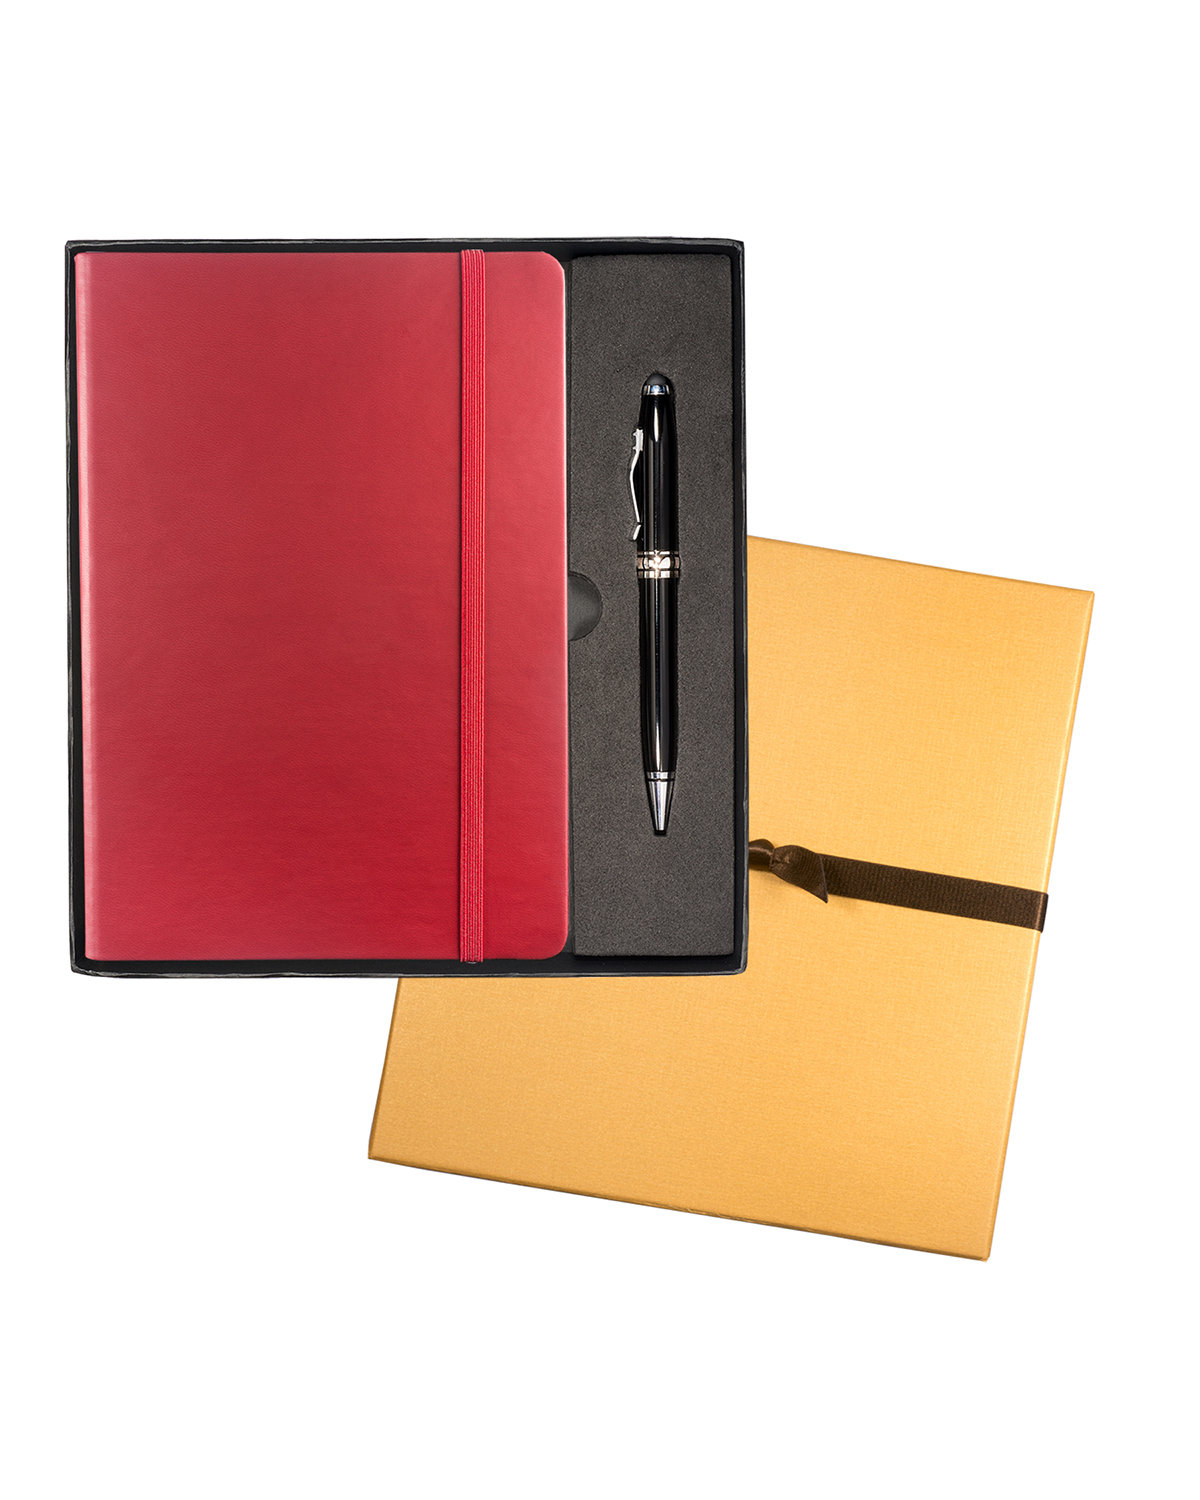 Leeman Tuscany™ Journal And Executive Stylus Pen Set red 